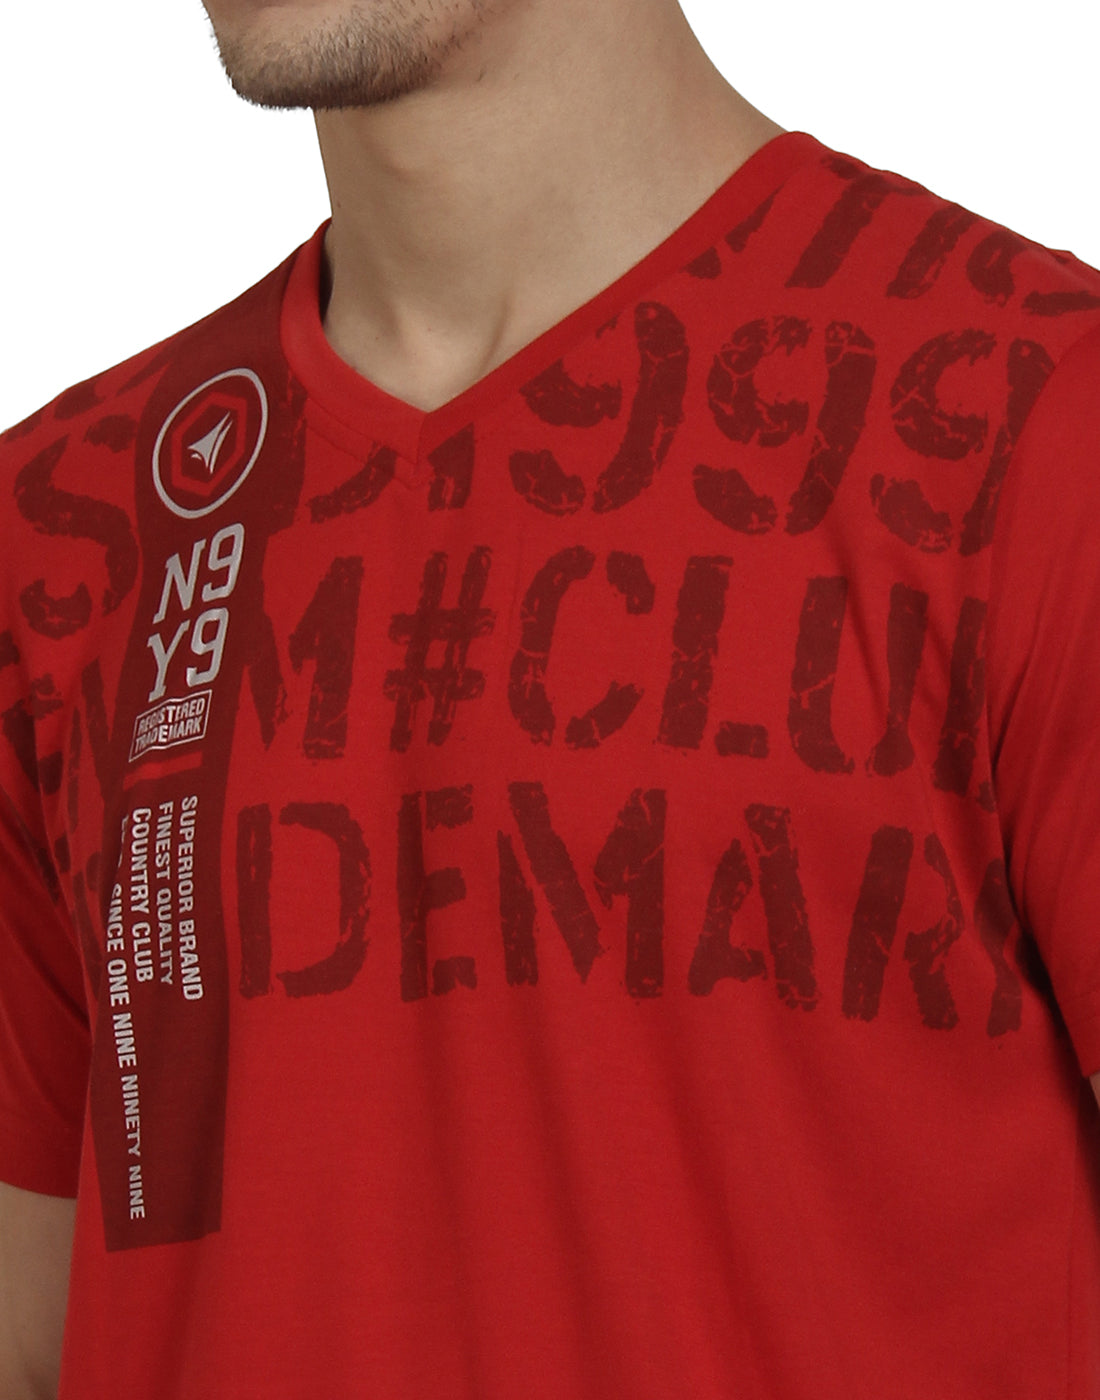 V Neck Printed T-Shirt For Men- Red